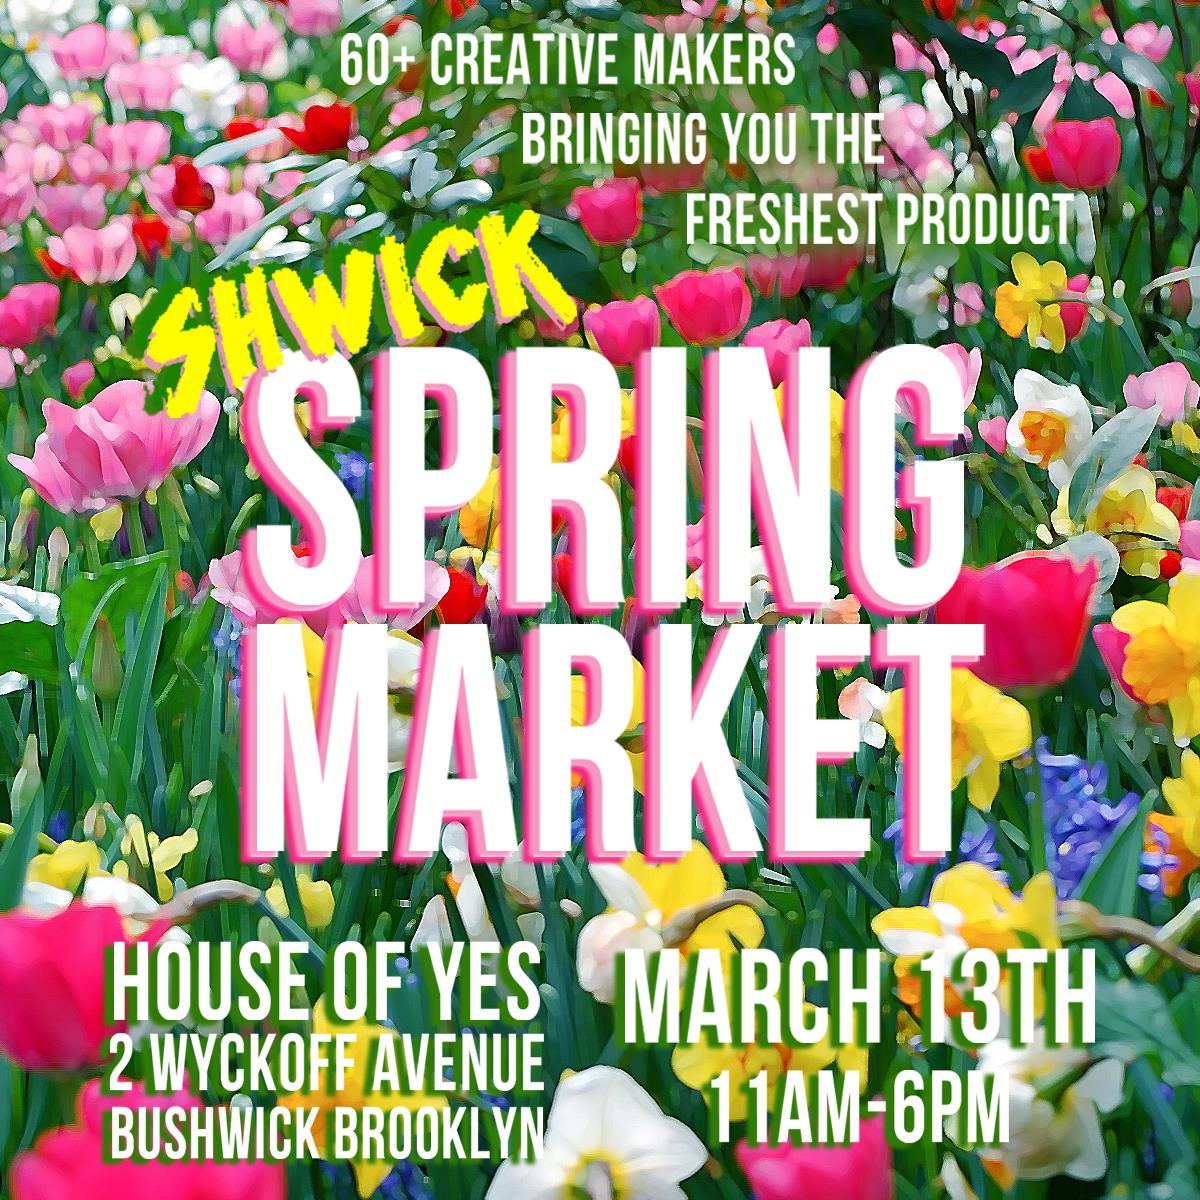 The Shwick Spring Market